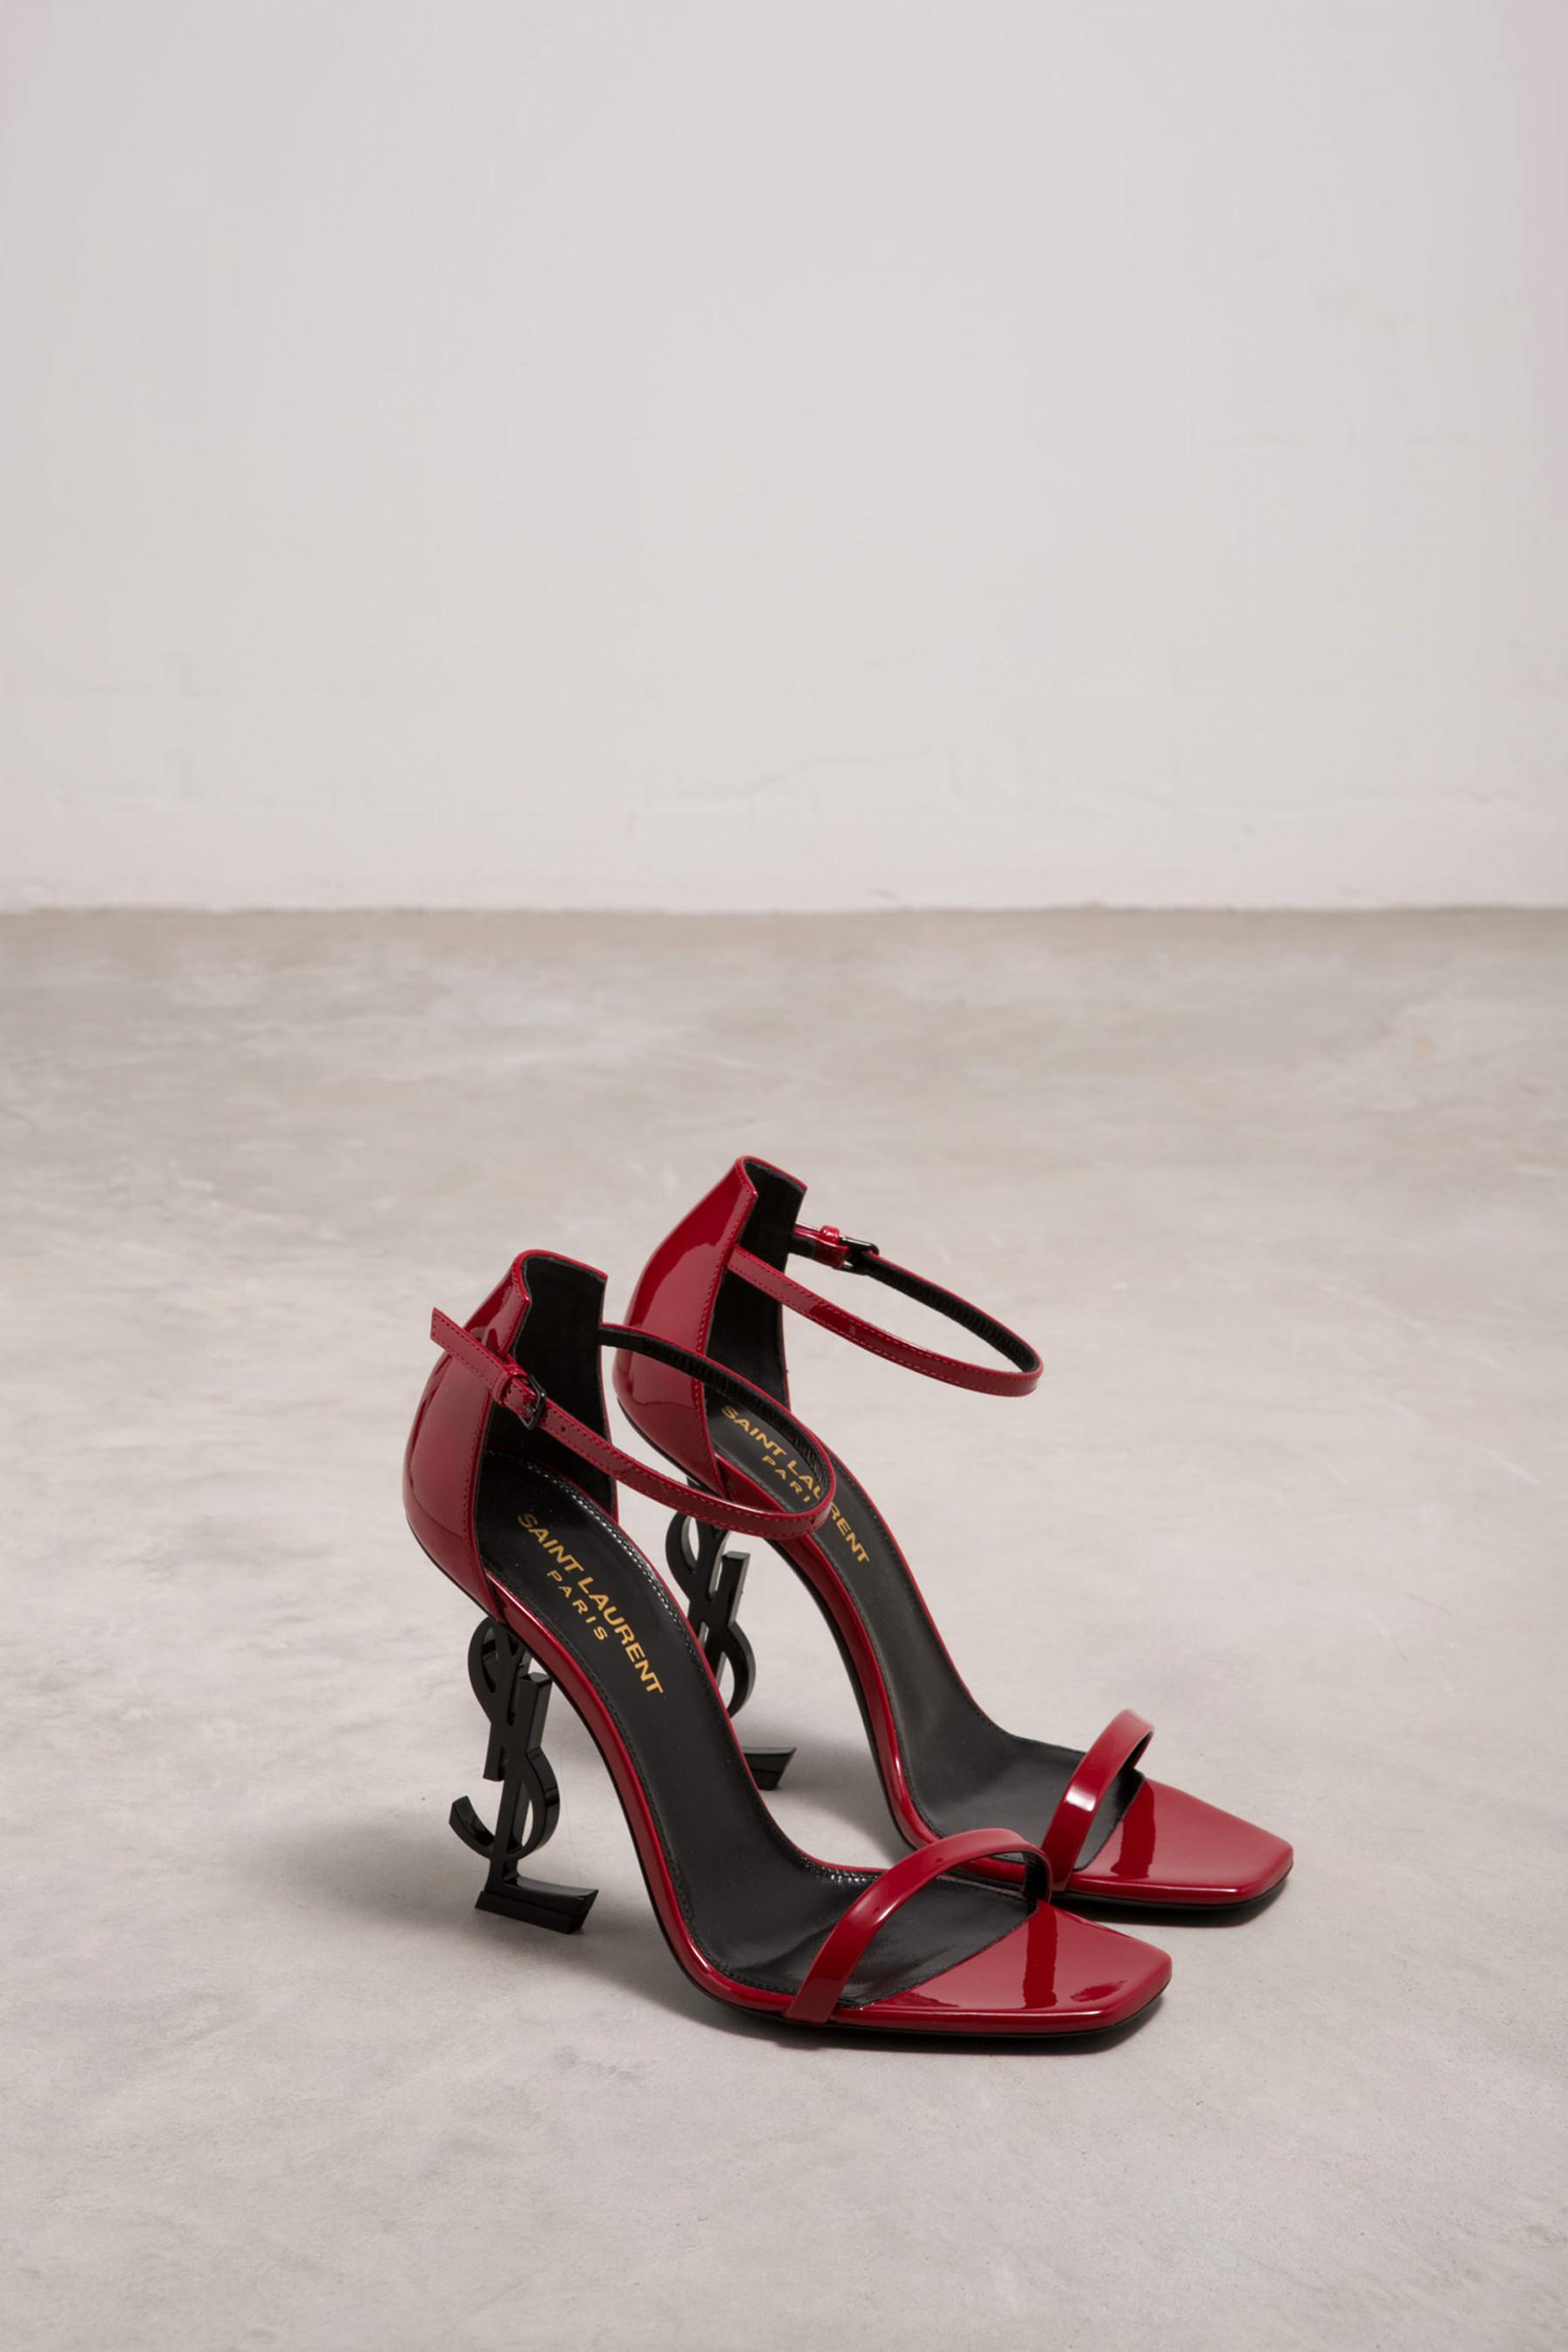 red ysl heels \u003e Up to 73% OFF \u003e In stock